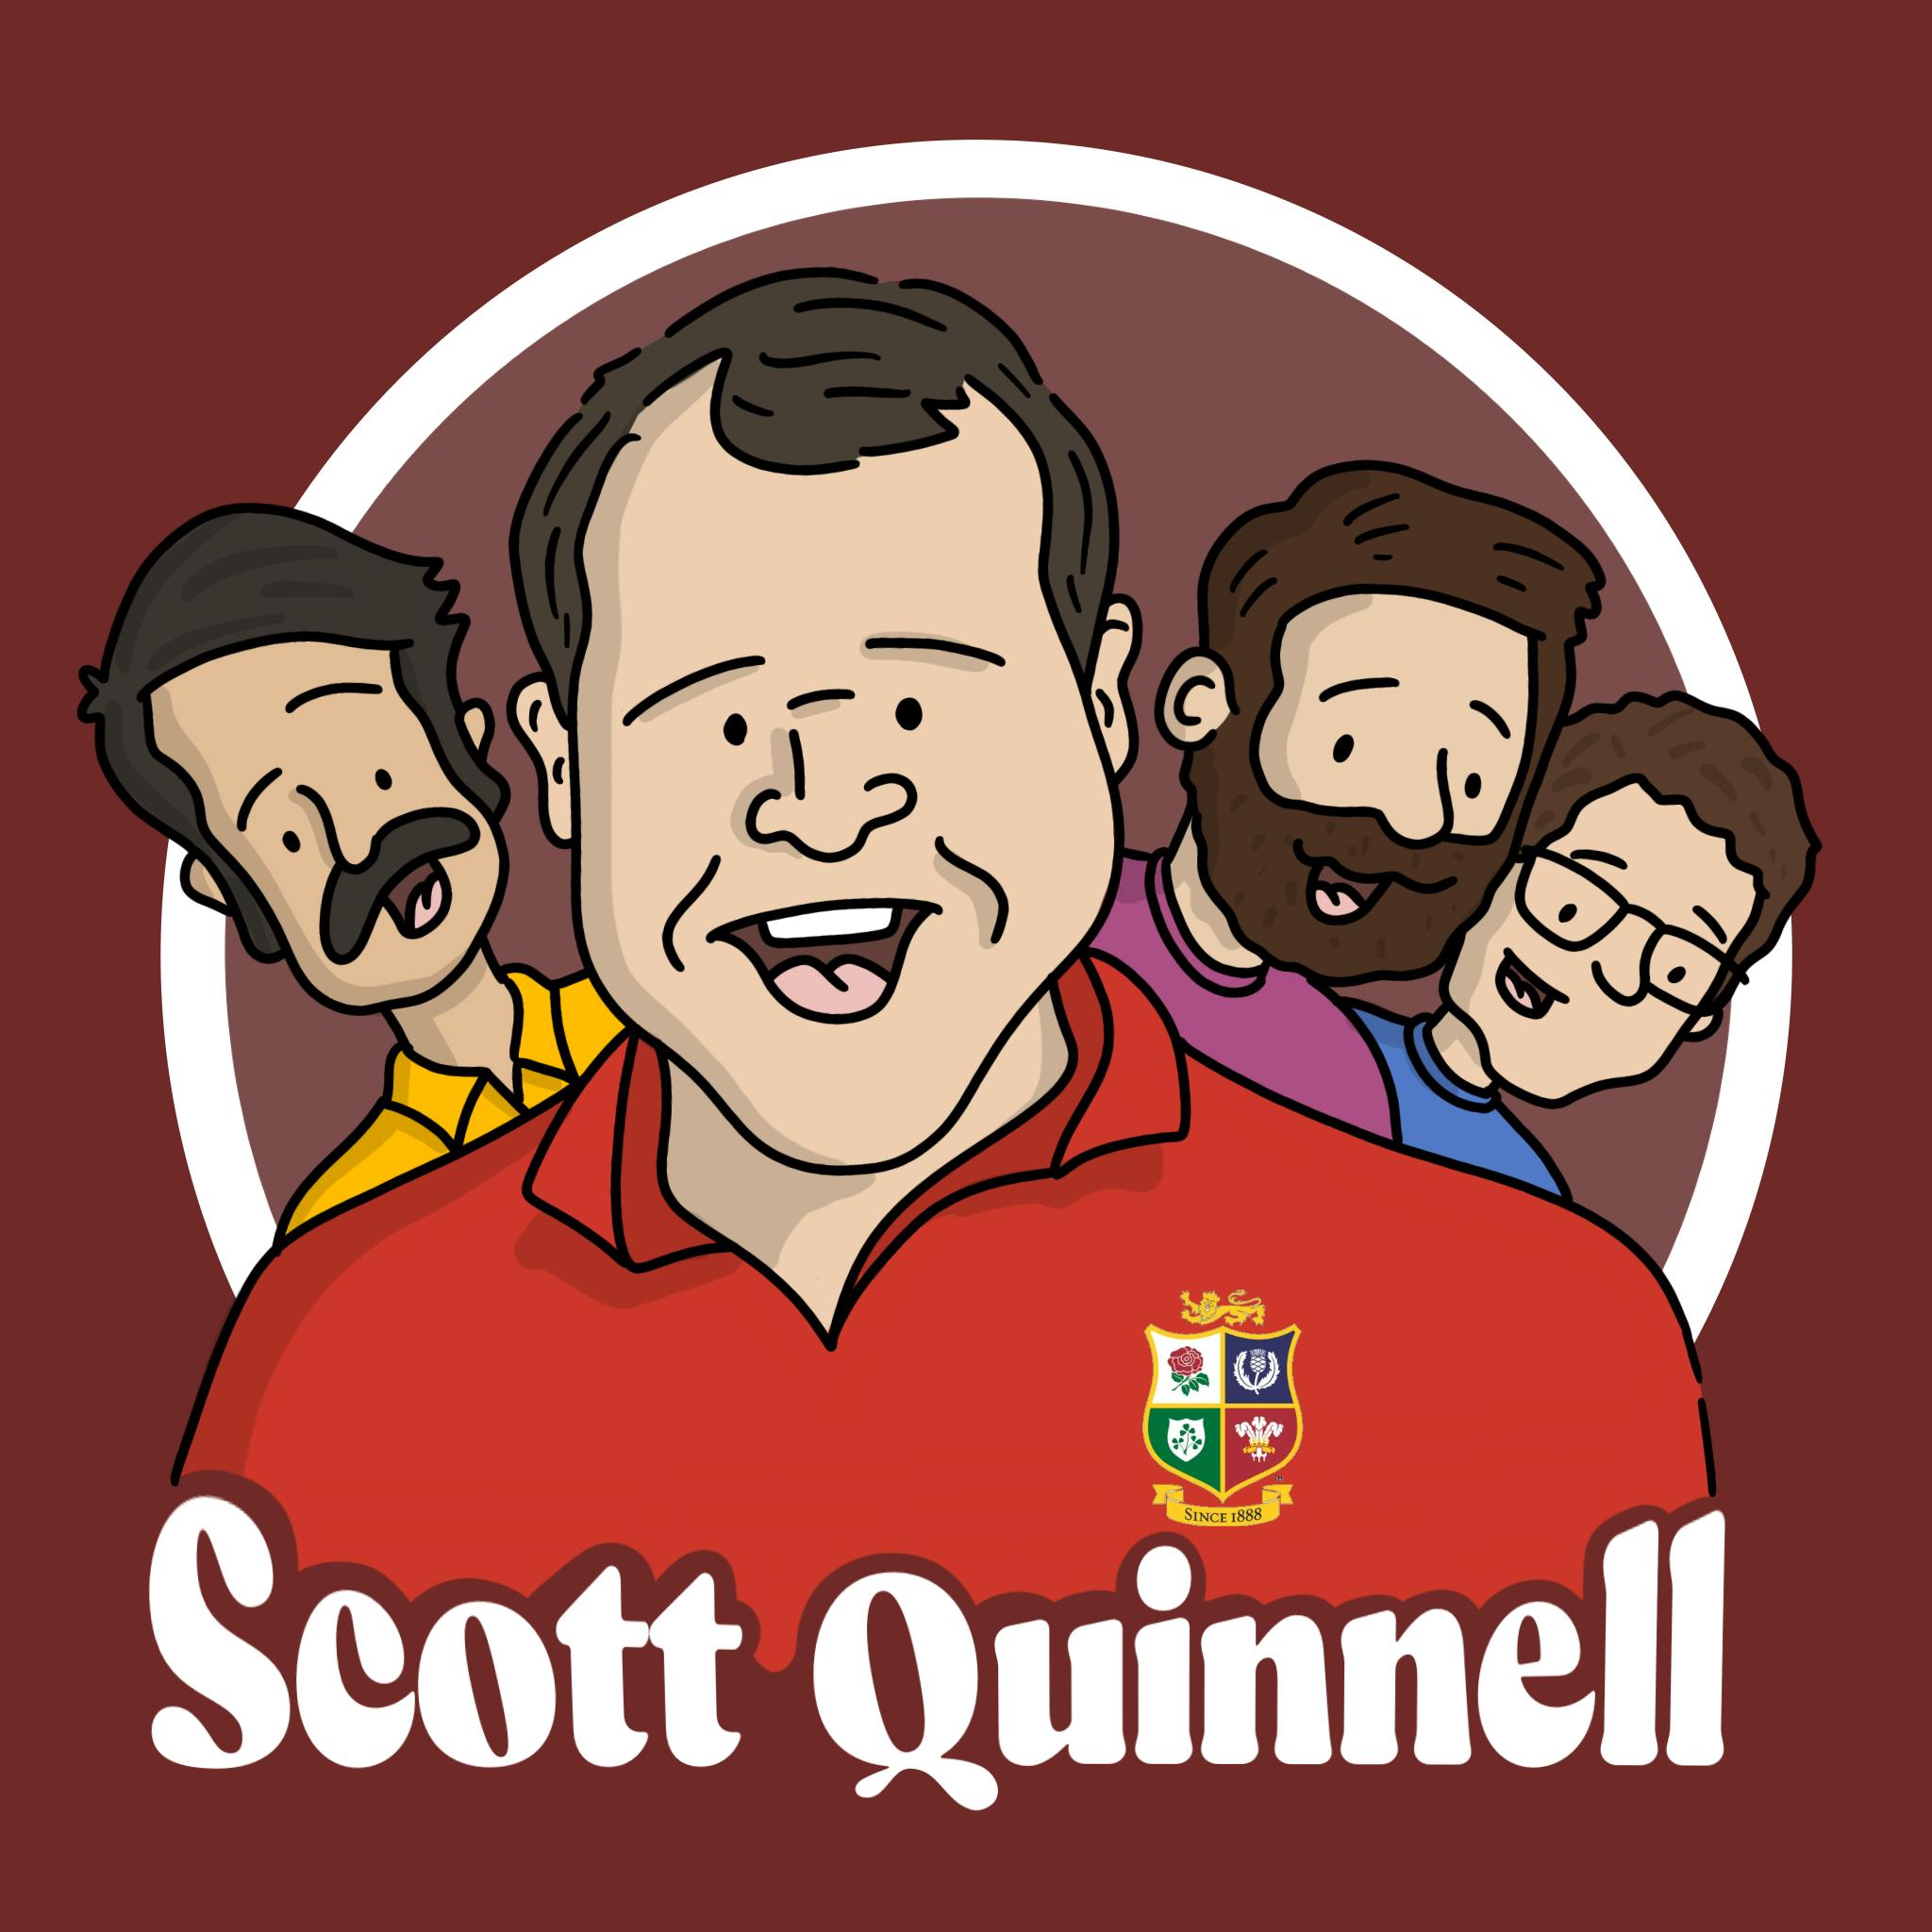 Episode 207, Part 2: Scott Quinnell